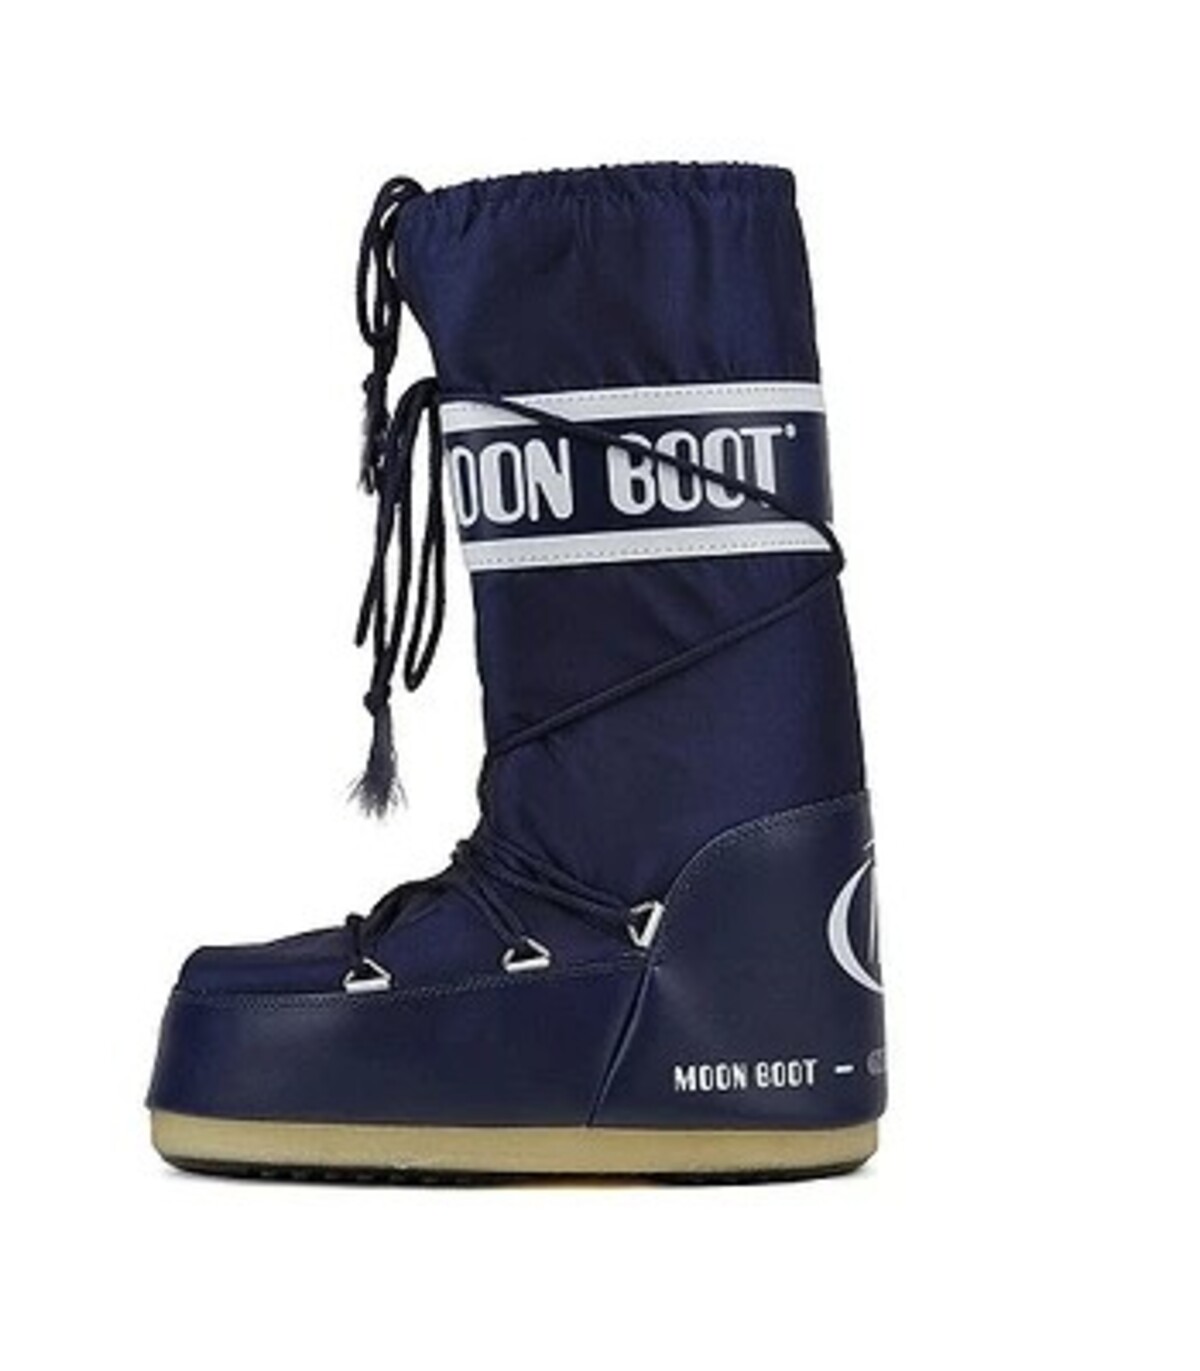 móda obuv moon boots influenceri celebrity 